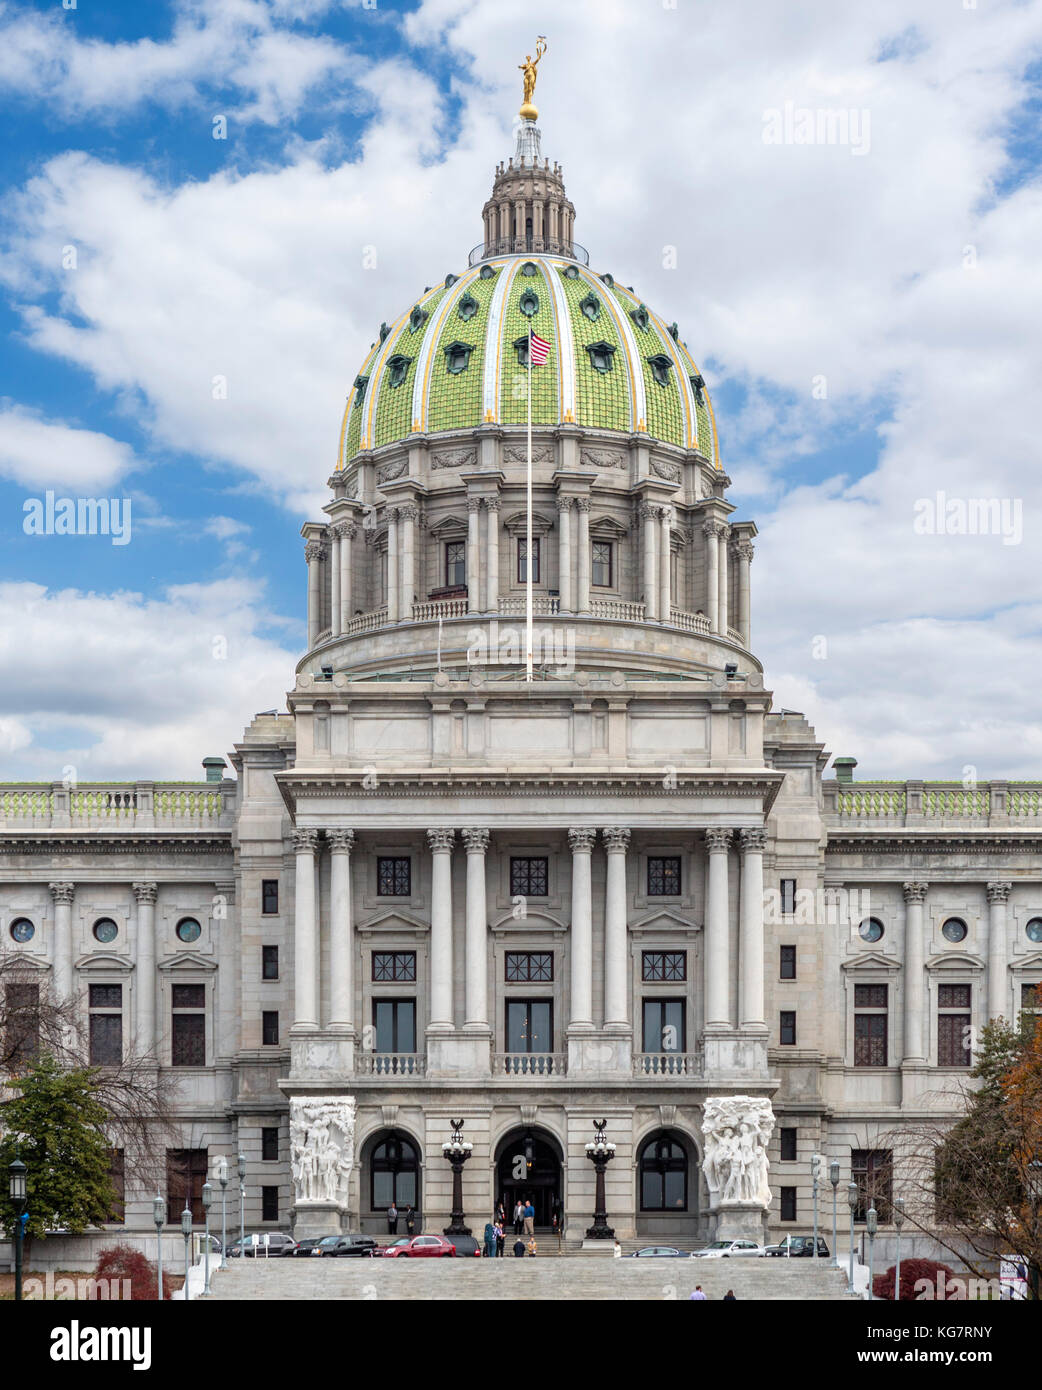 The Pennsylvania State Capitol, Harrisburg, Pennsylvania, USA Stock Photo